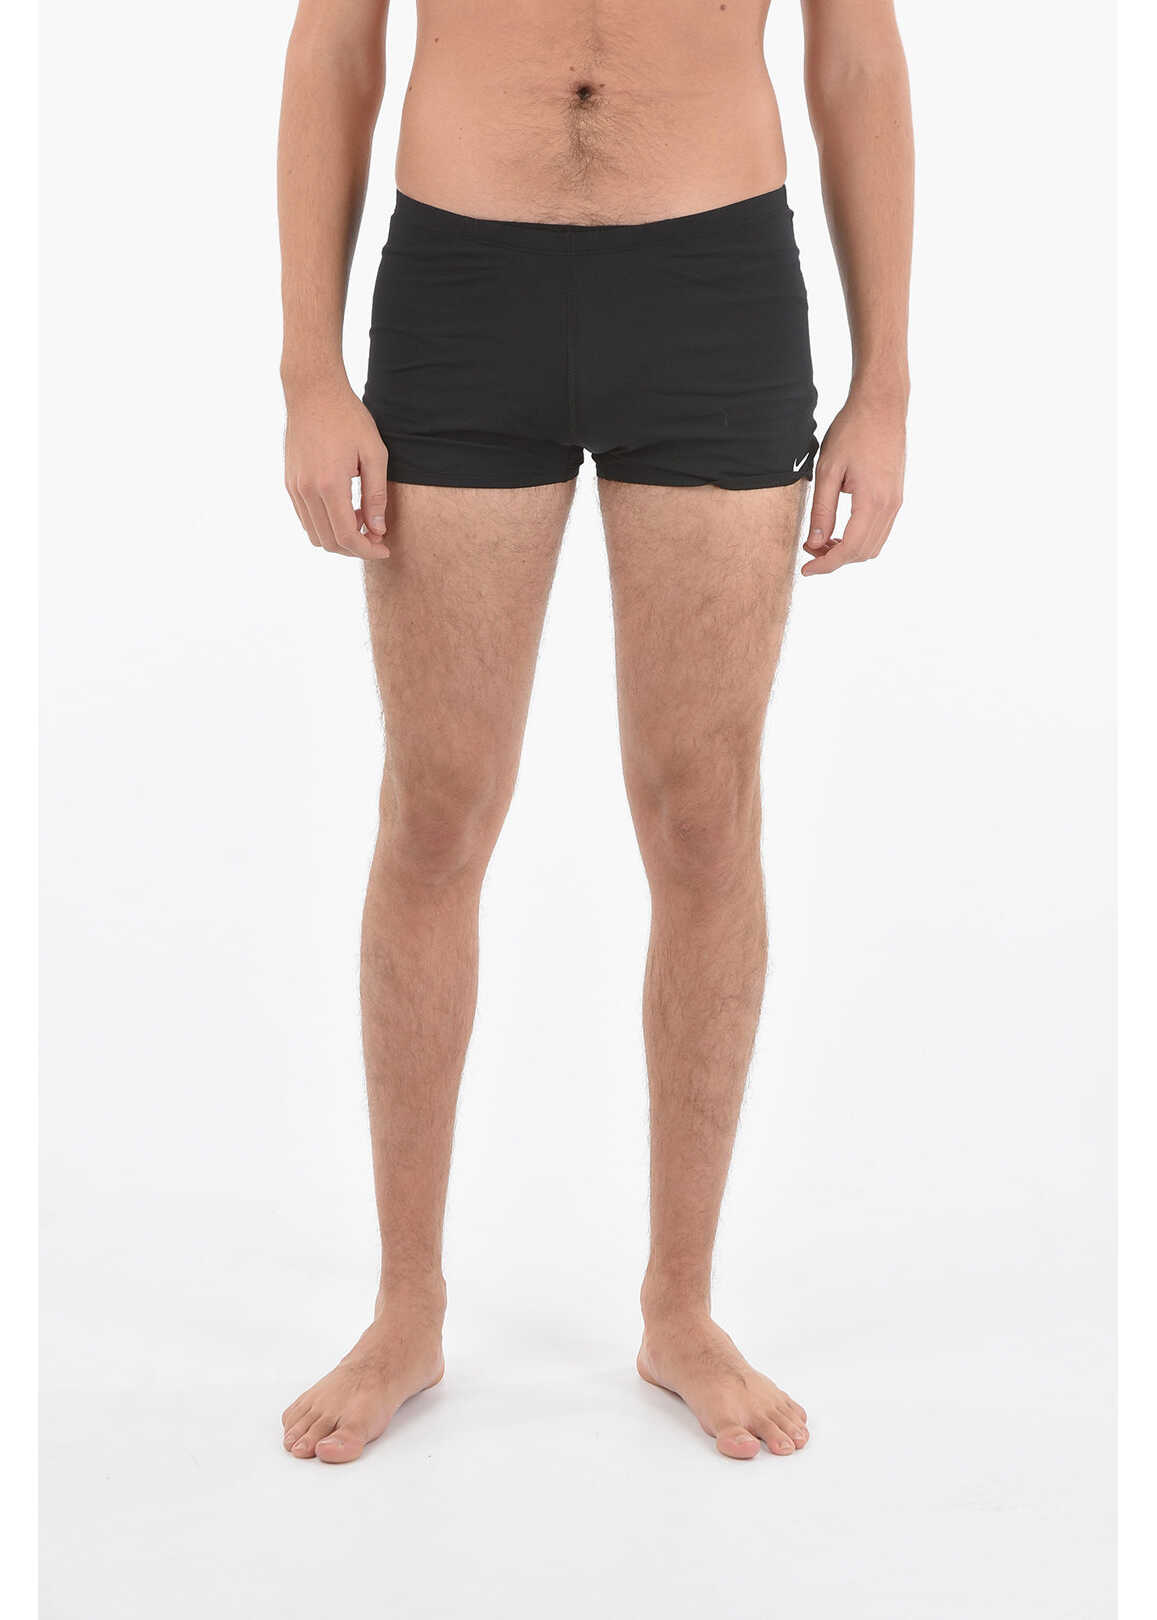 Nike Swim Solid Color Square Leg Shorts Swimsuit With Drawstring Black